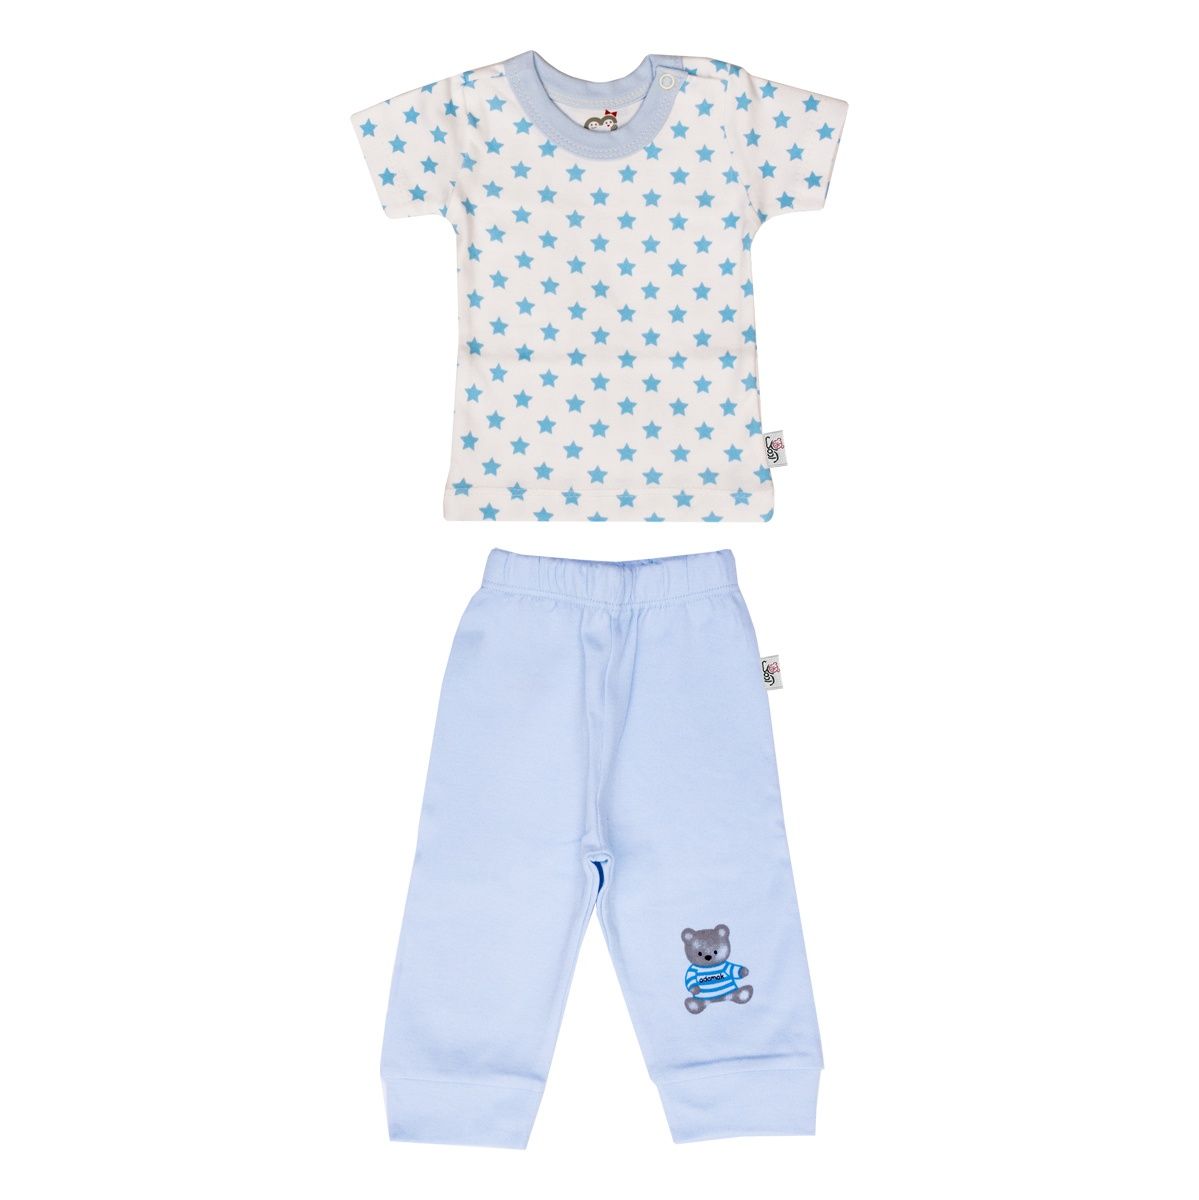 ست تی شرت و شلوار نوزادی پسرانه آدمک طرح ستاره آبی کد 01